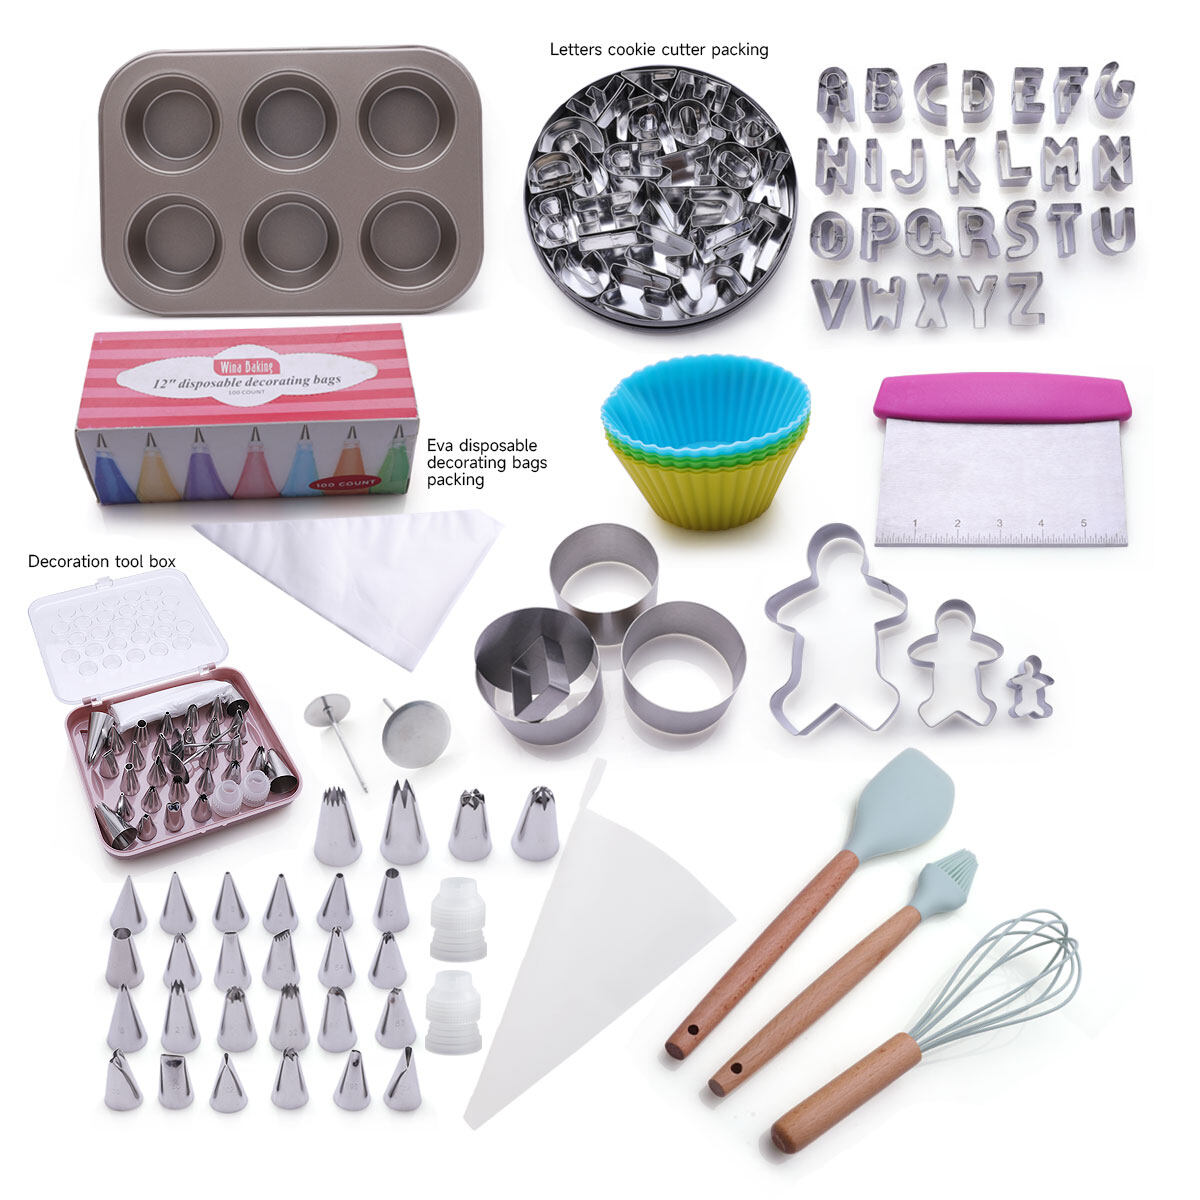 176pcs Cake Decorating Supplies, Cake Decorating Kits Baking Set, Baking Cake Mold, Cake Decorating Tools